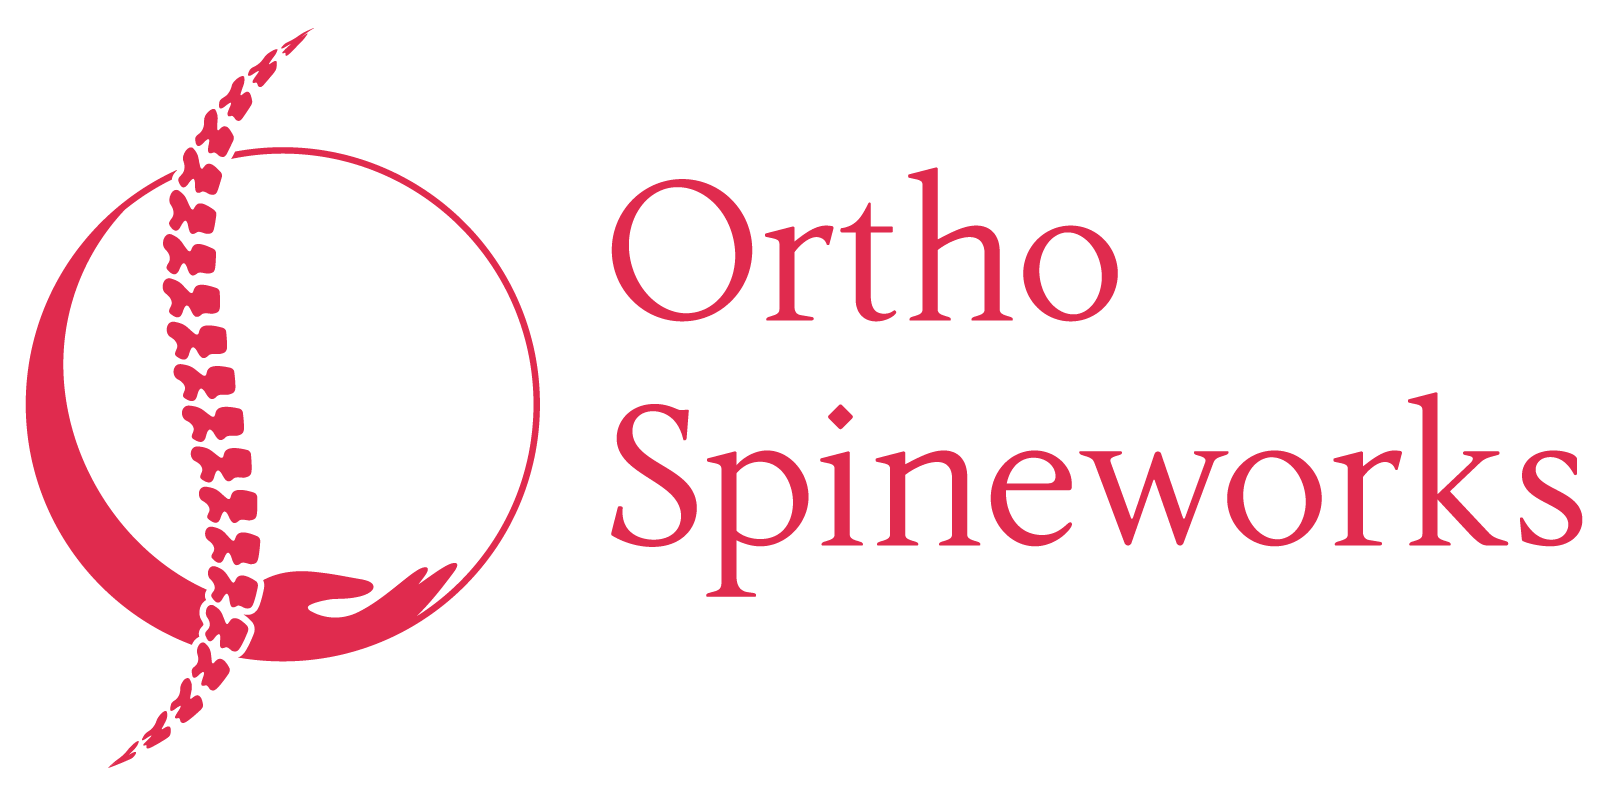 ortho spineworks logo transparent